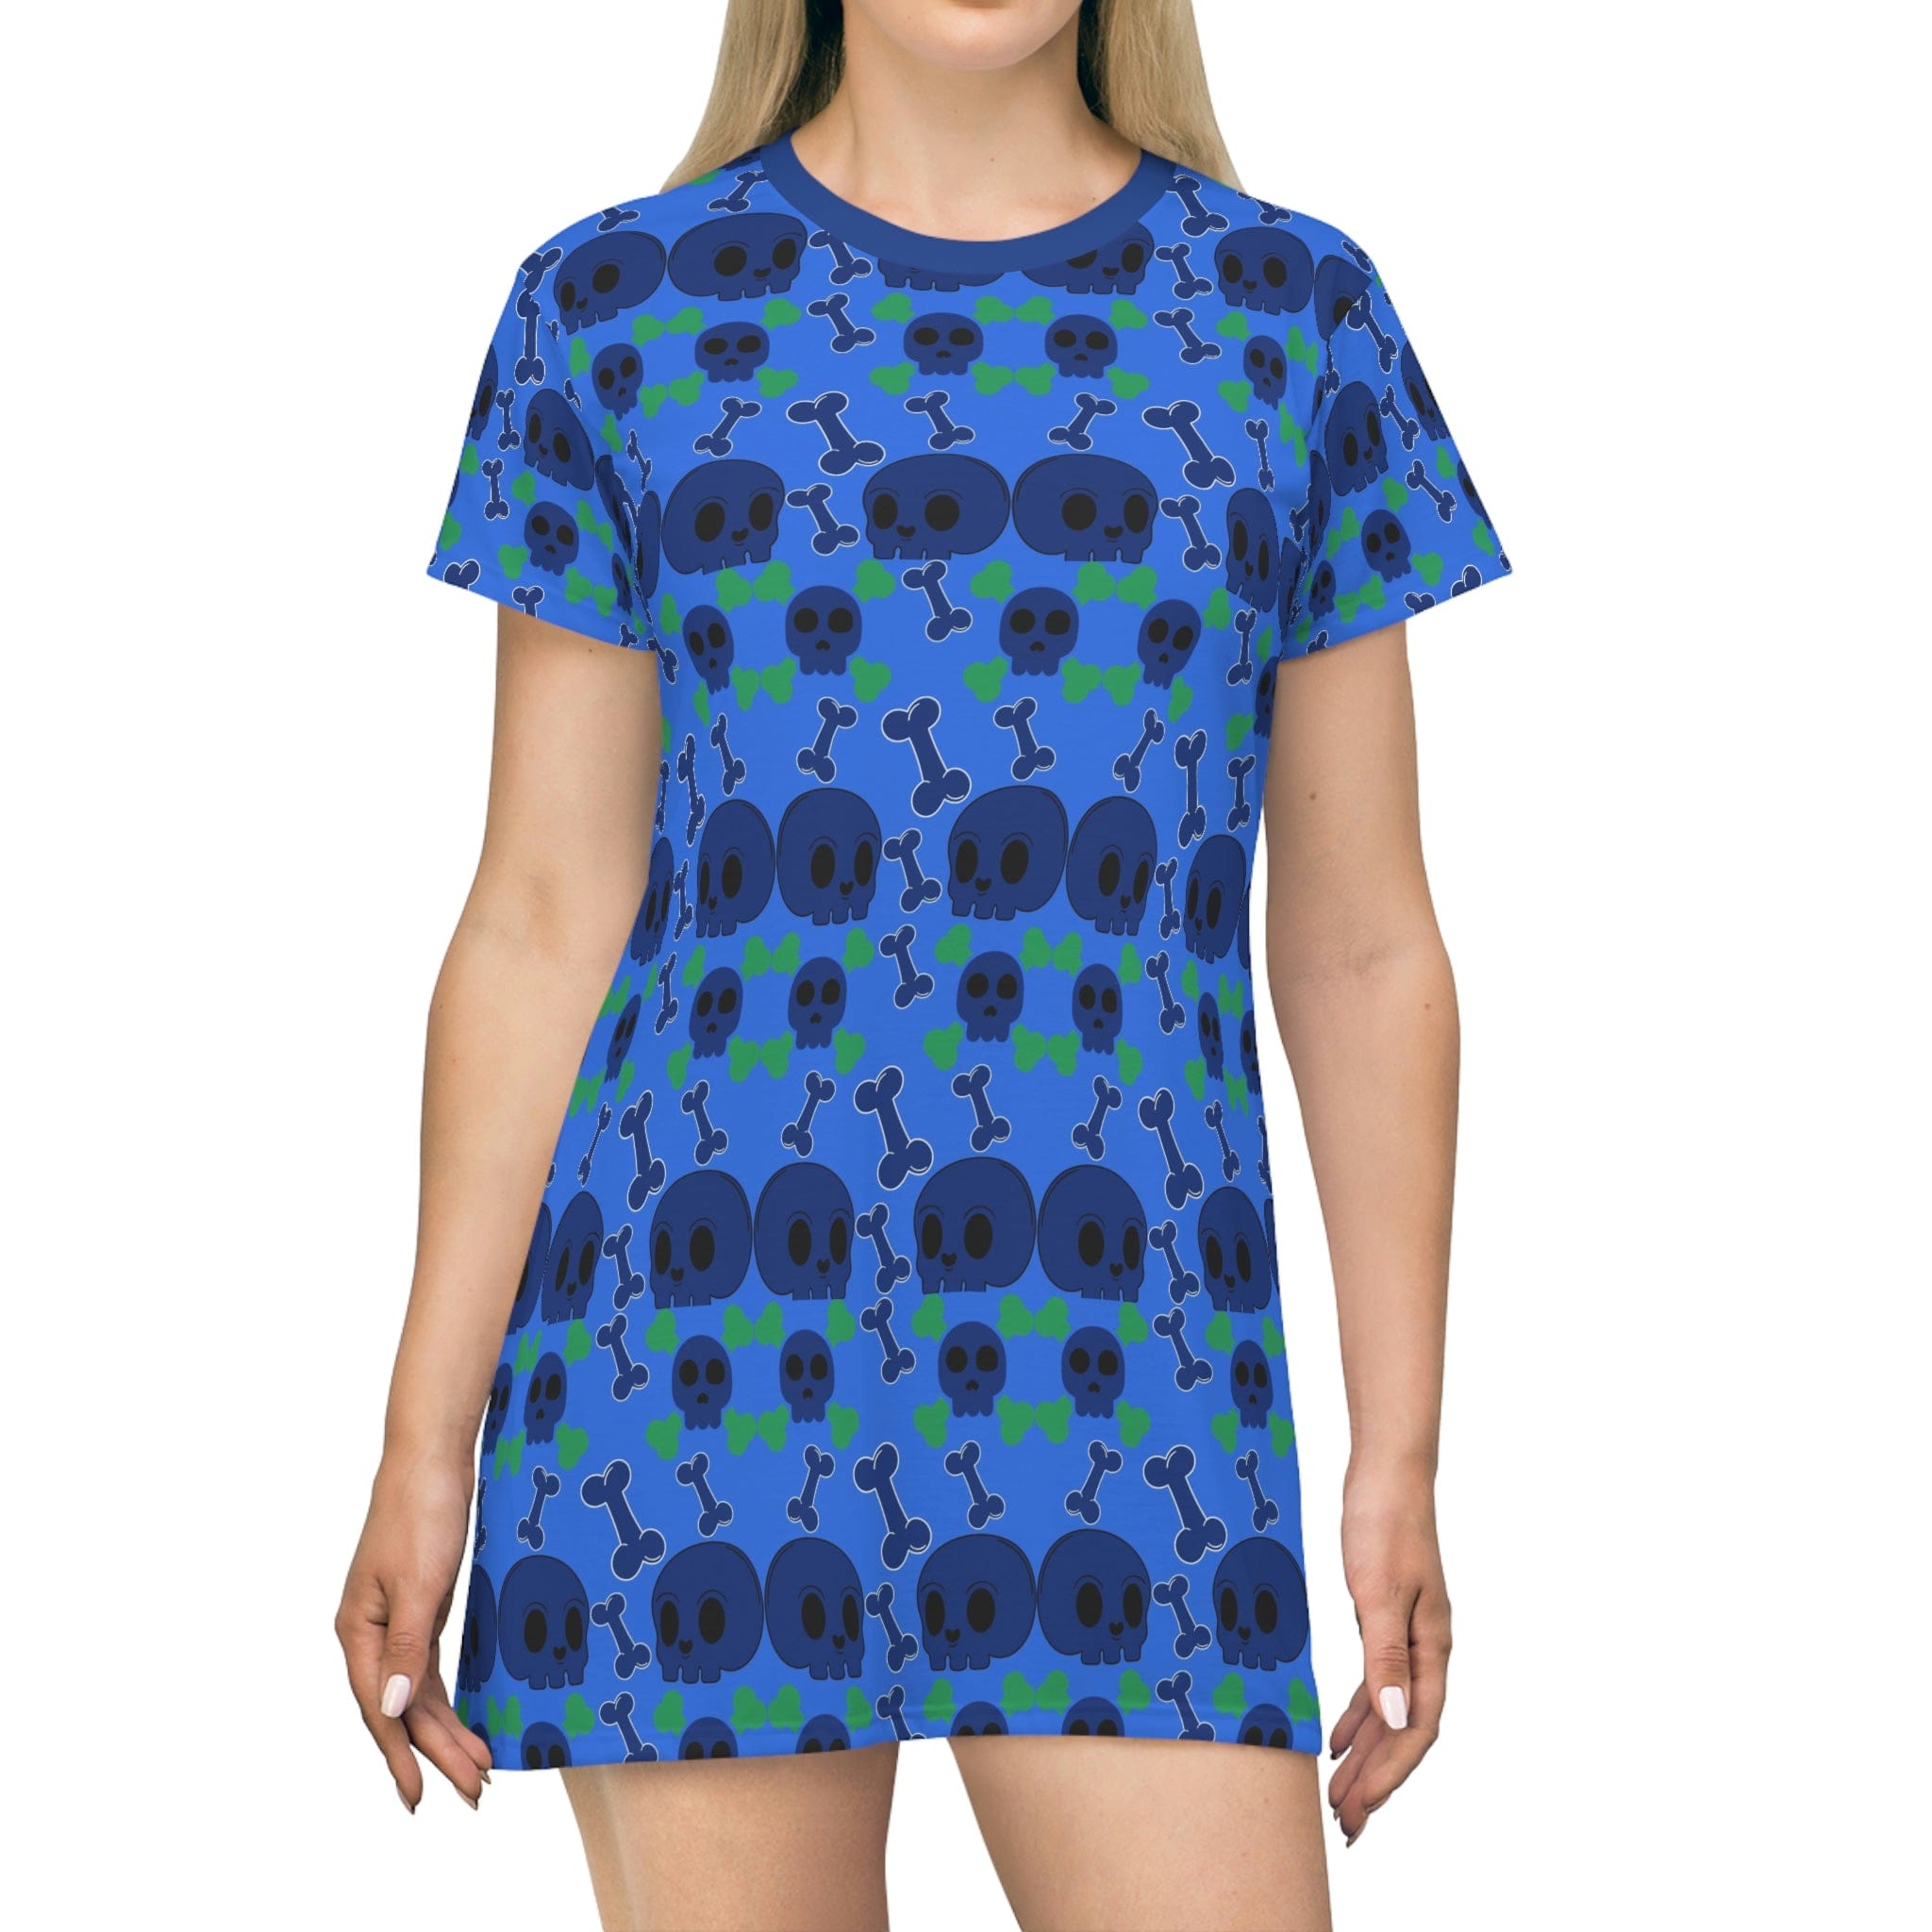 Women's Blue Skull Print T-Shirt Dress